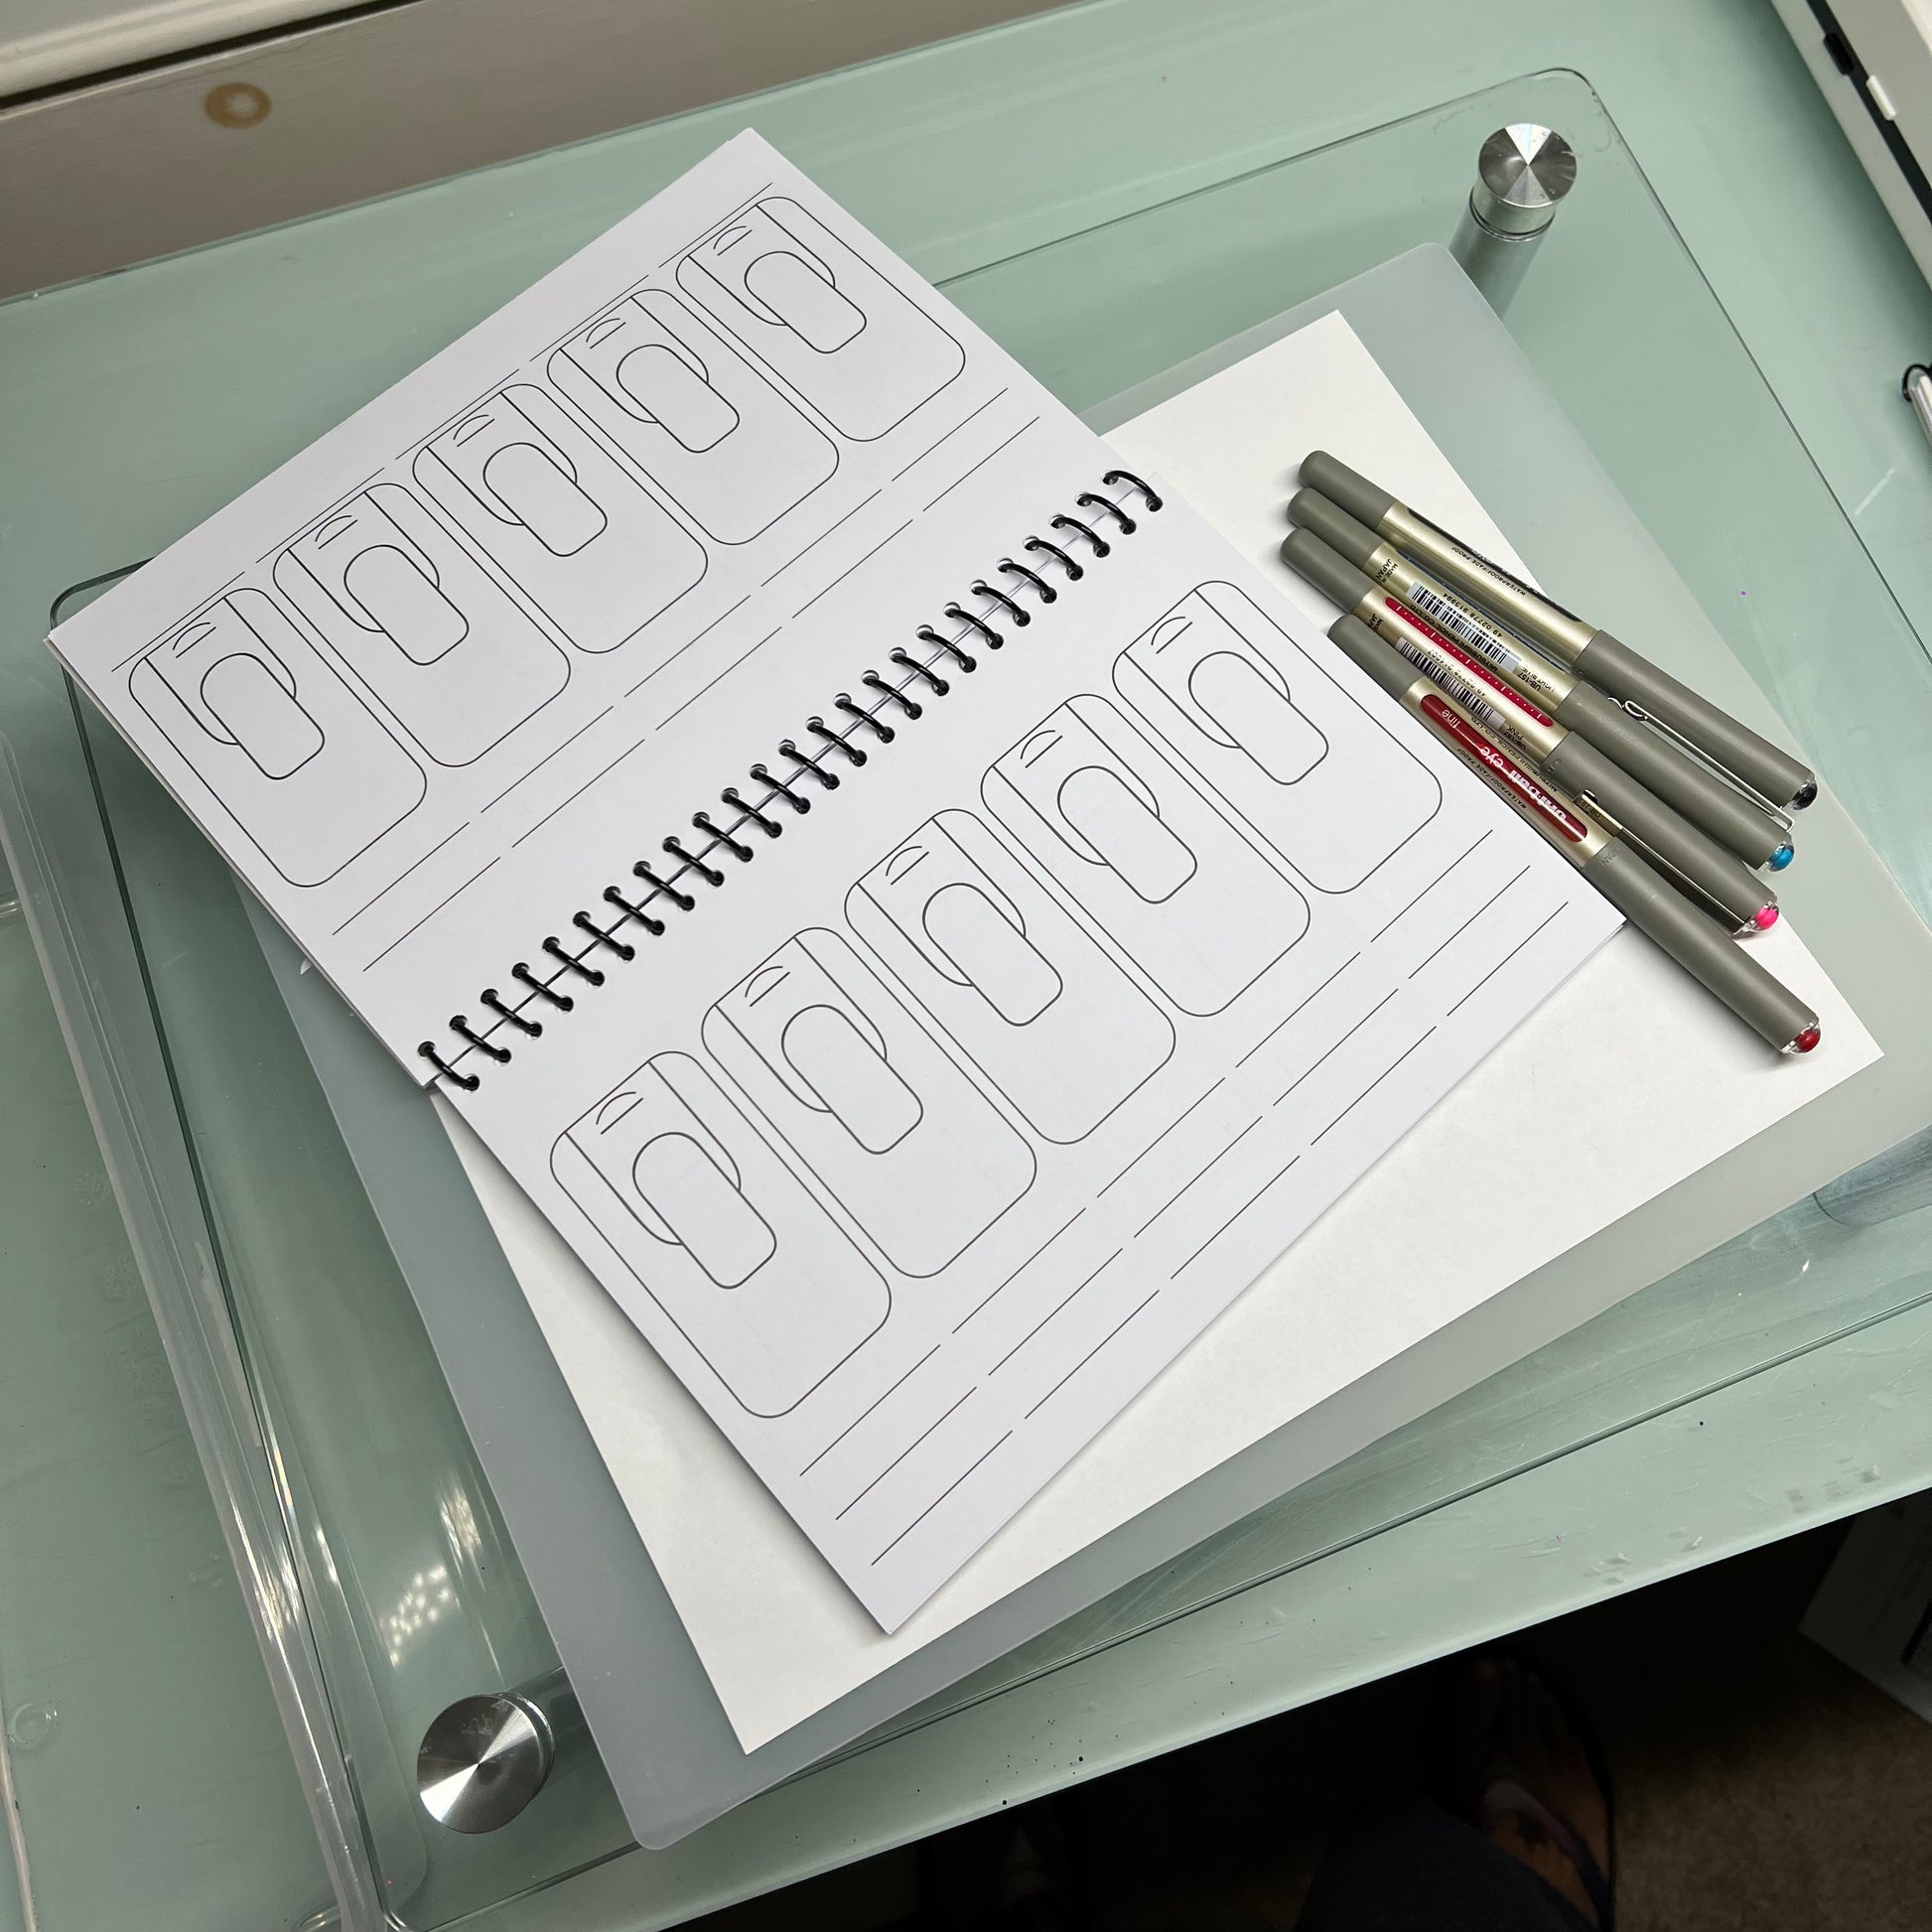 NAIL ART SKETCHBOOK: Sketchbook to practice the art of blank nails